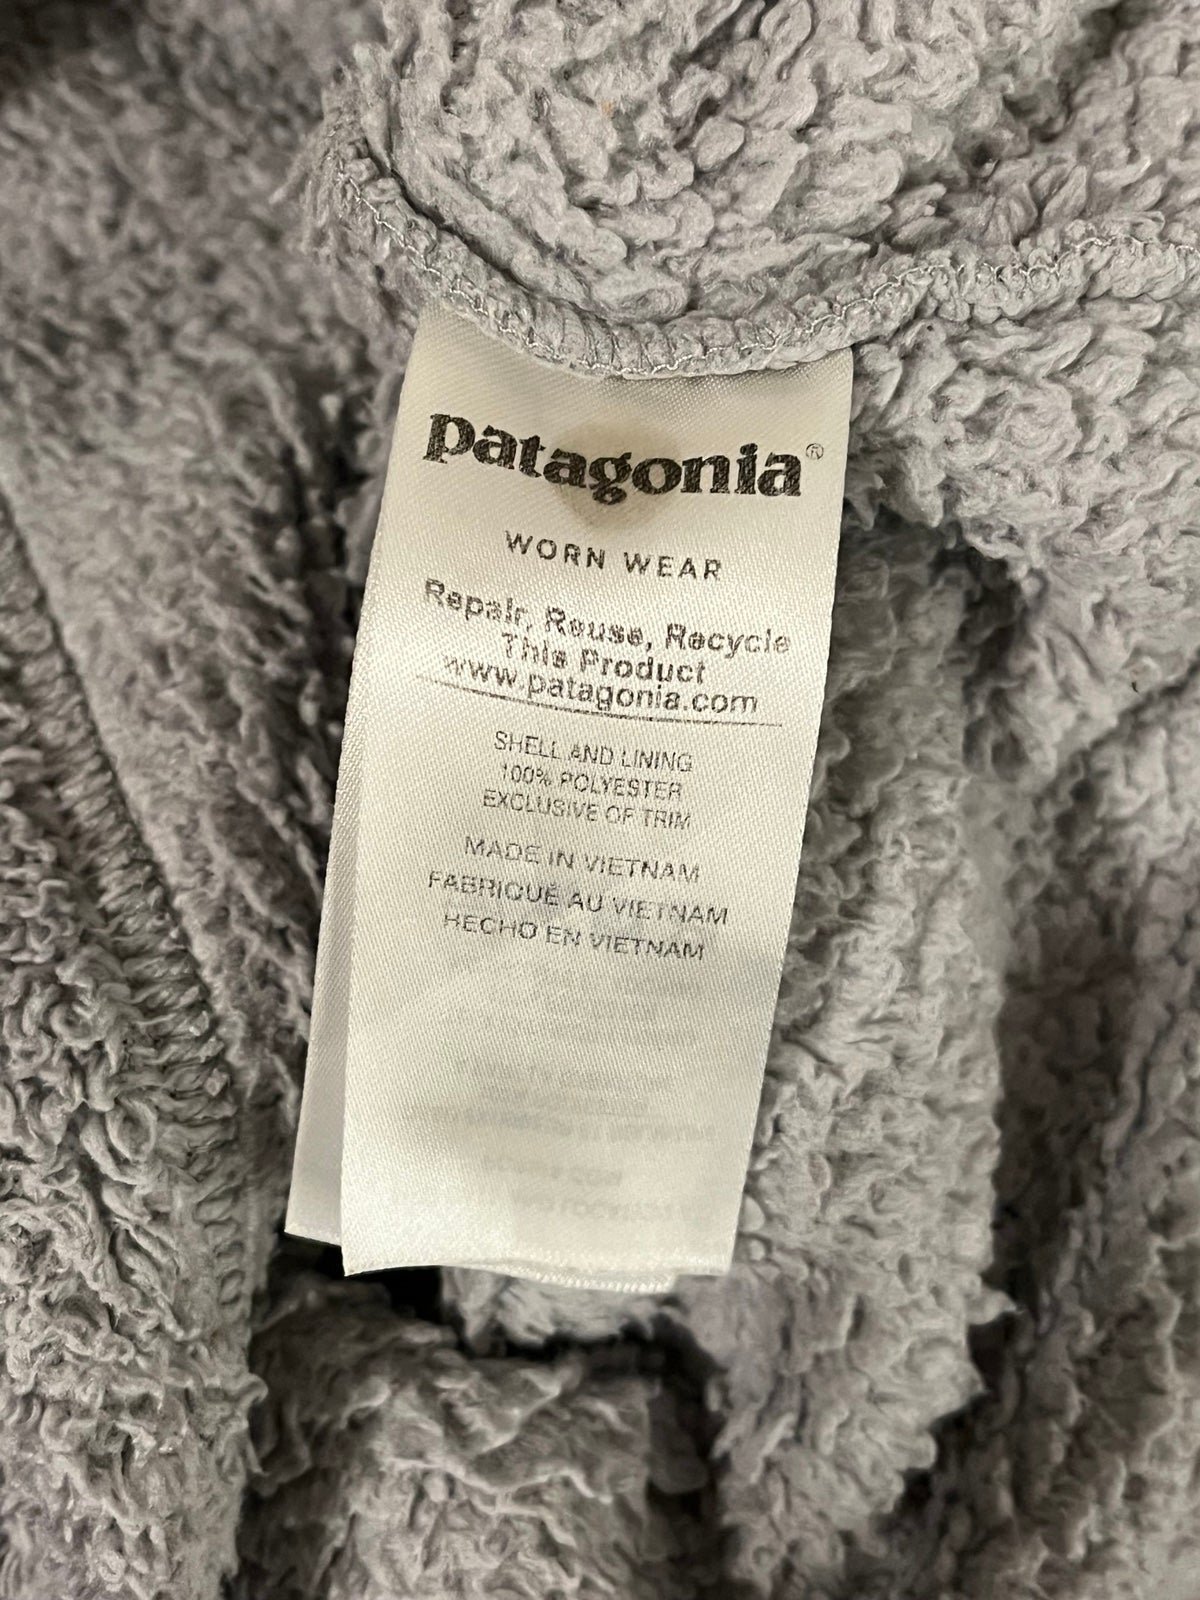 reasonable price Patagonia Los Gatos Fleece Jacket Womens Sz L in Gray 1/4 Zip Pullover EUC M0uelM0tU Store Online